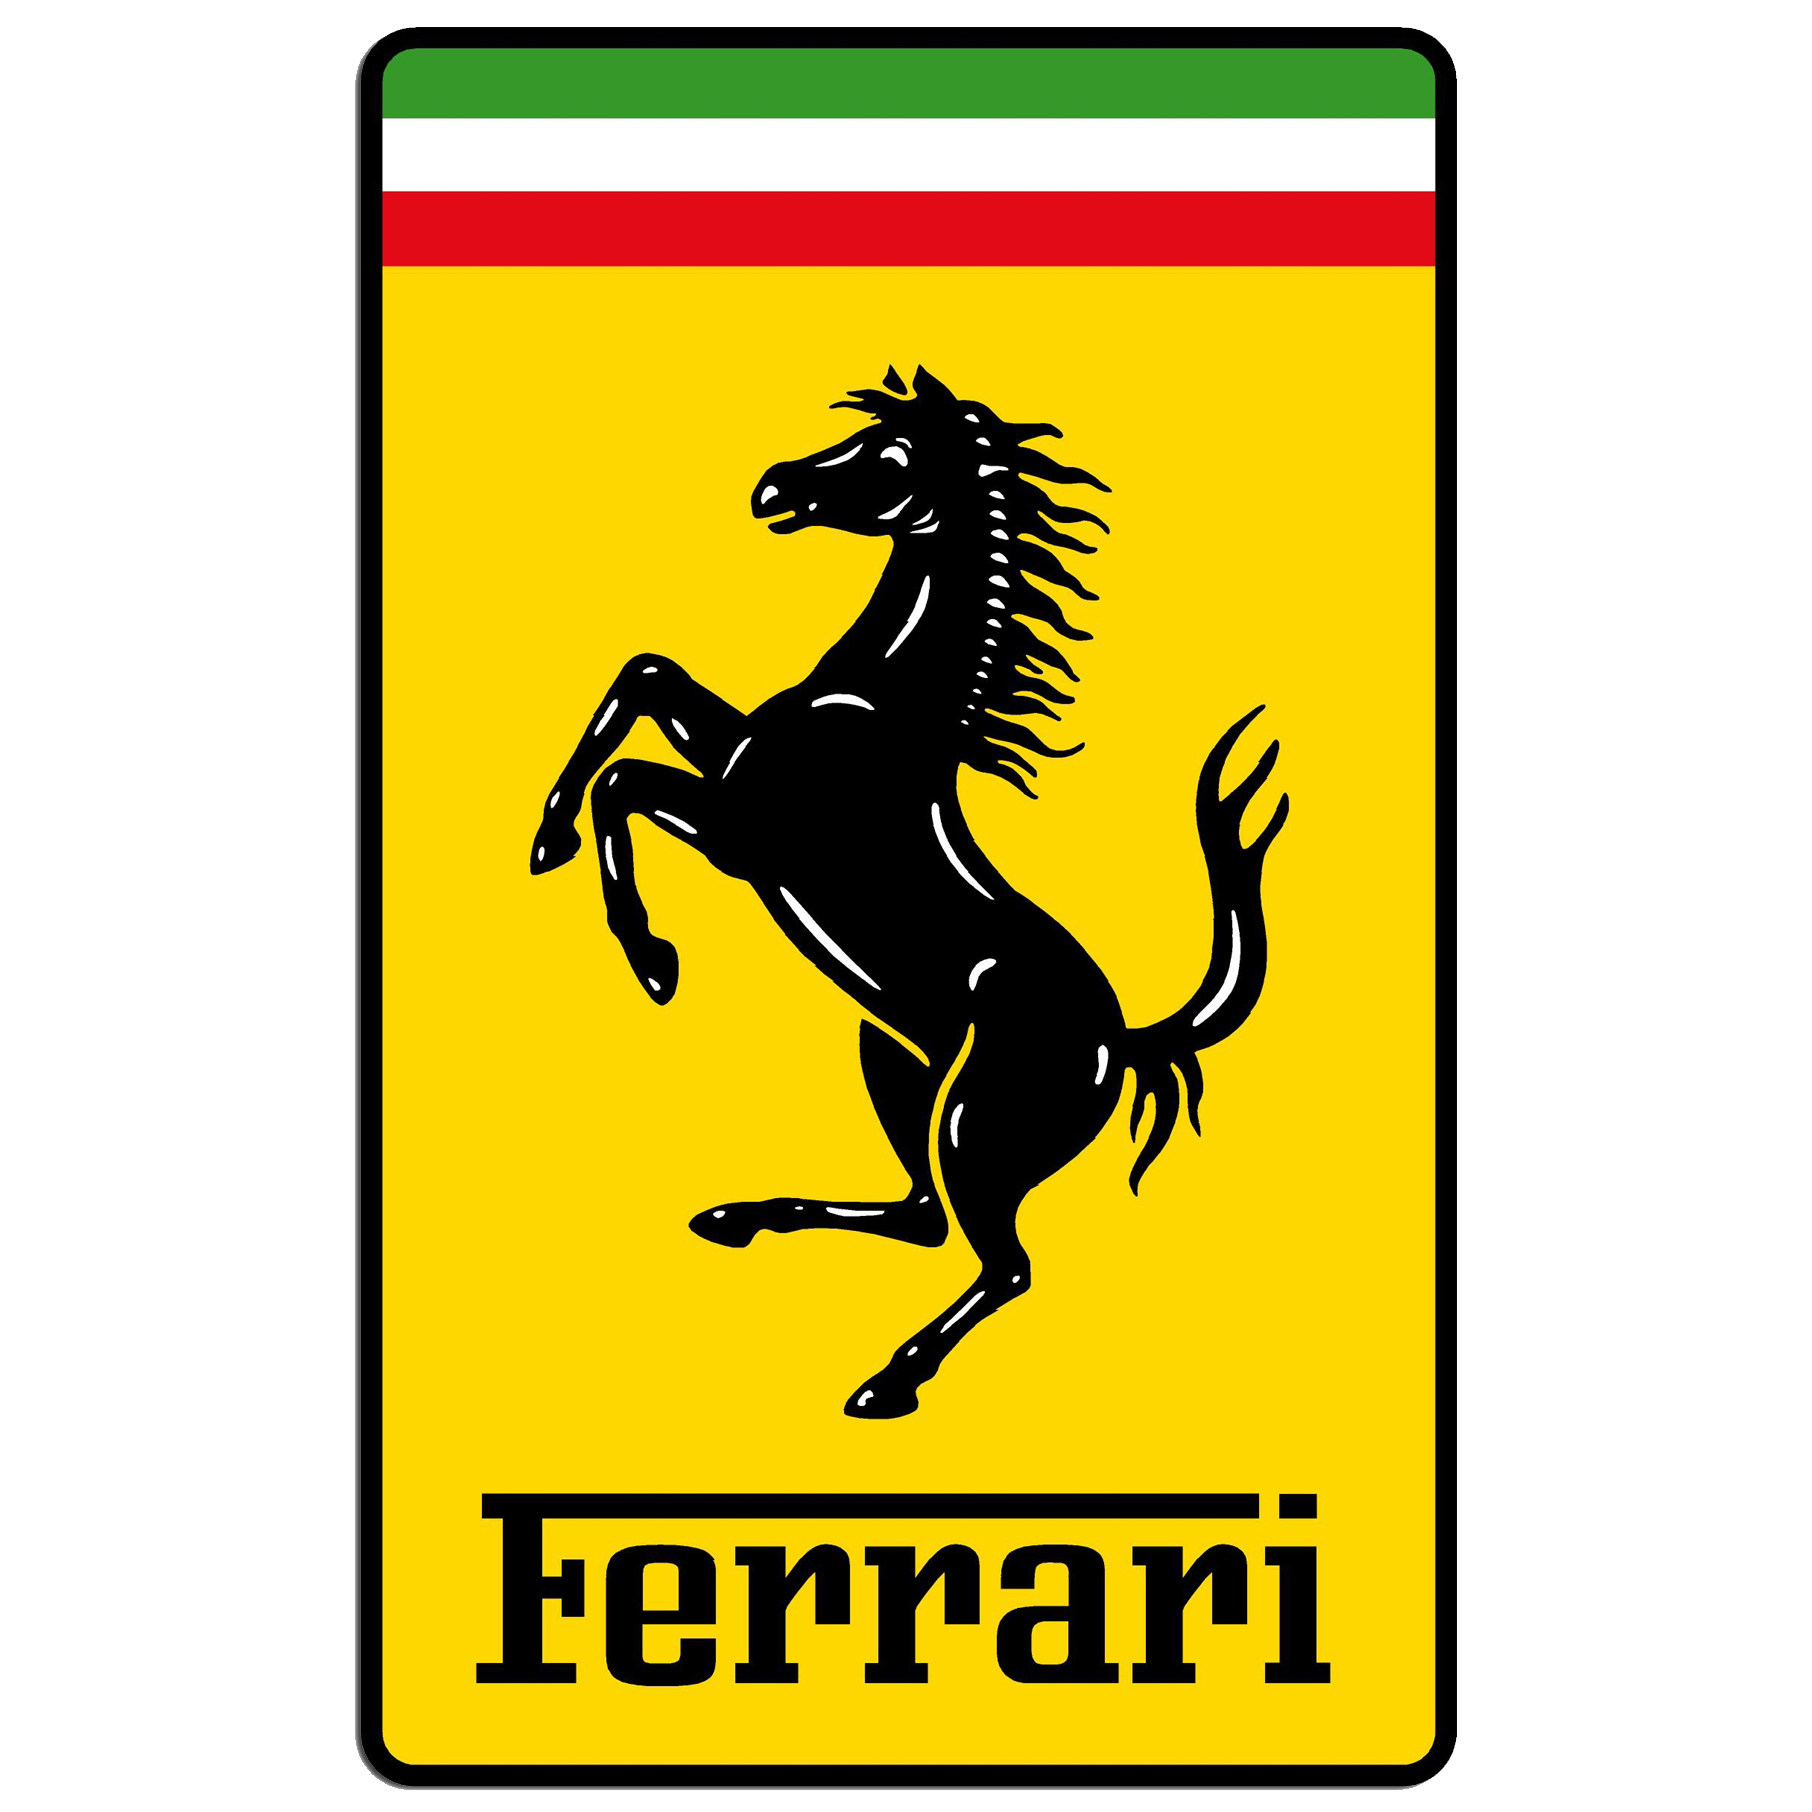 Ferrari 599 (2006 - 2012) for sale